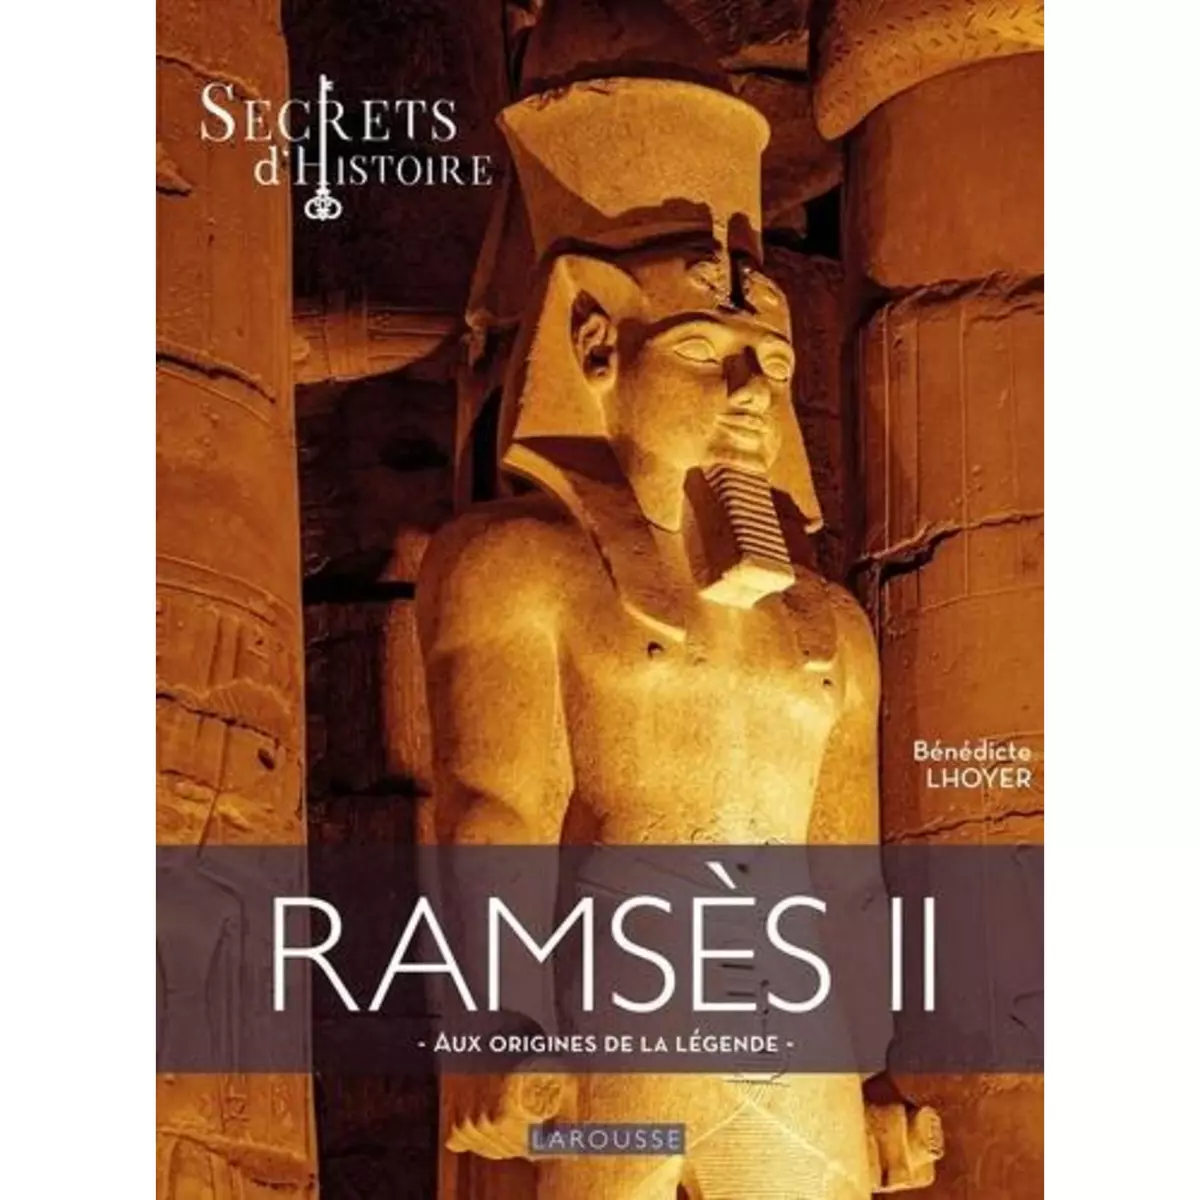  RAMSES II. SECRETS D'HISTOIRE, Lhoyer Bénédicte